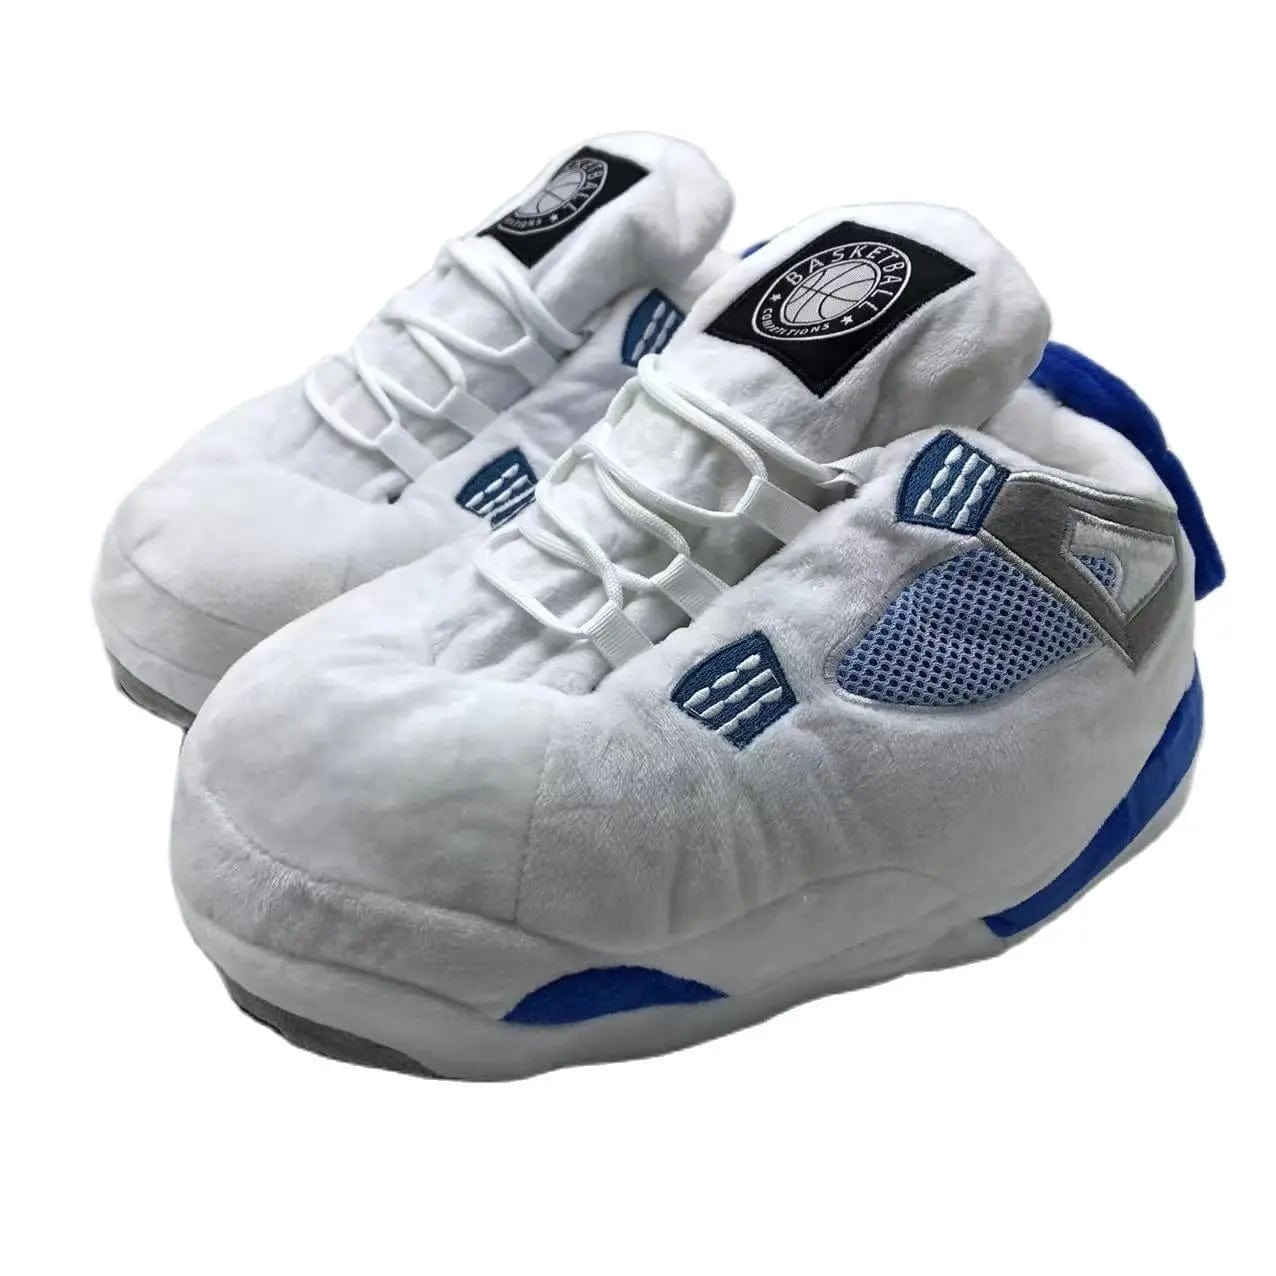 HomeBound Essentials As shown14 / 7(36-44 One Size) Jordan Max Air Retro Sneaker Slipper Shoes